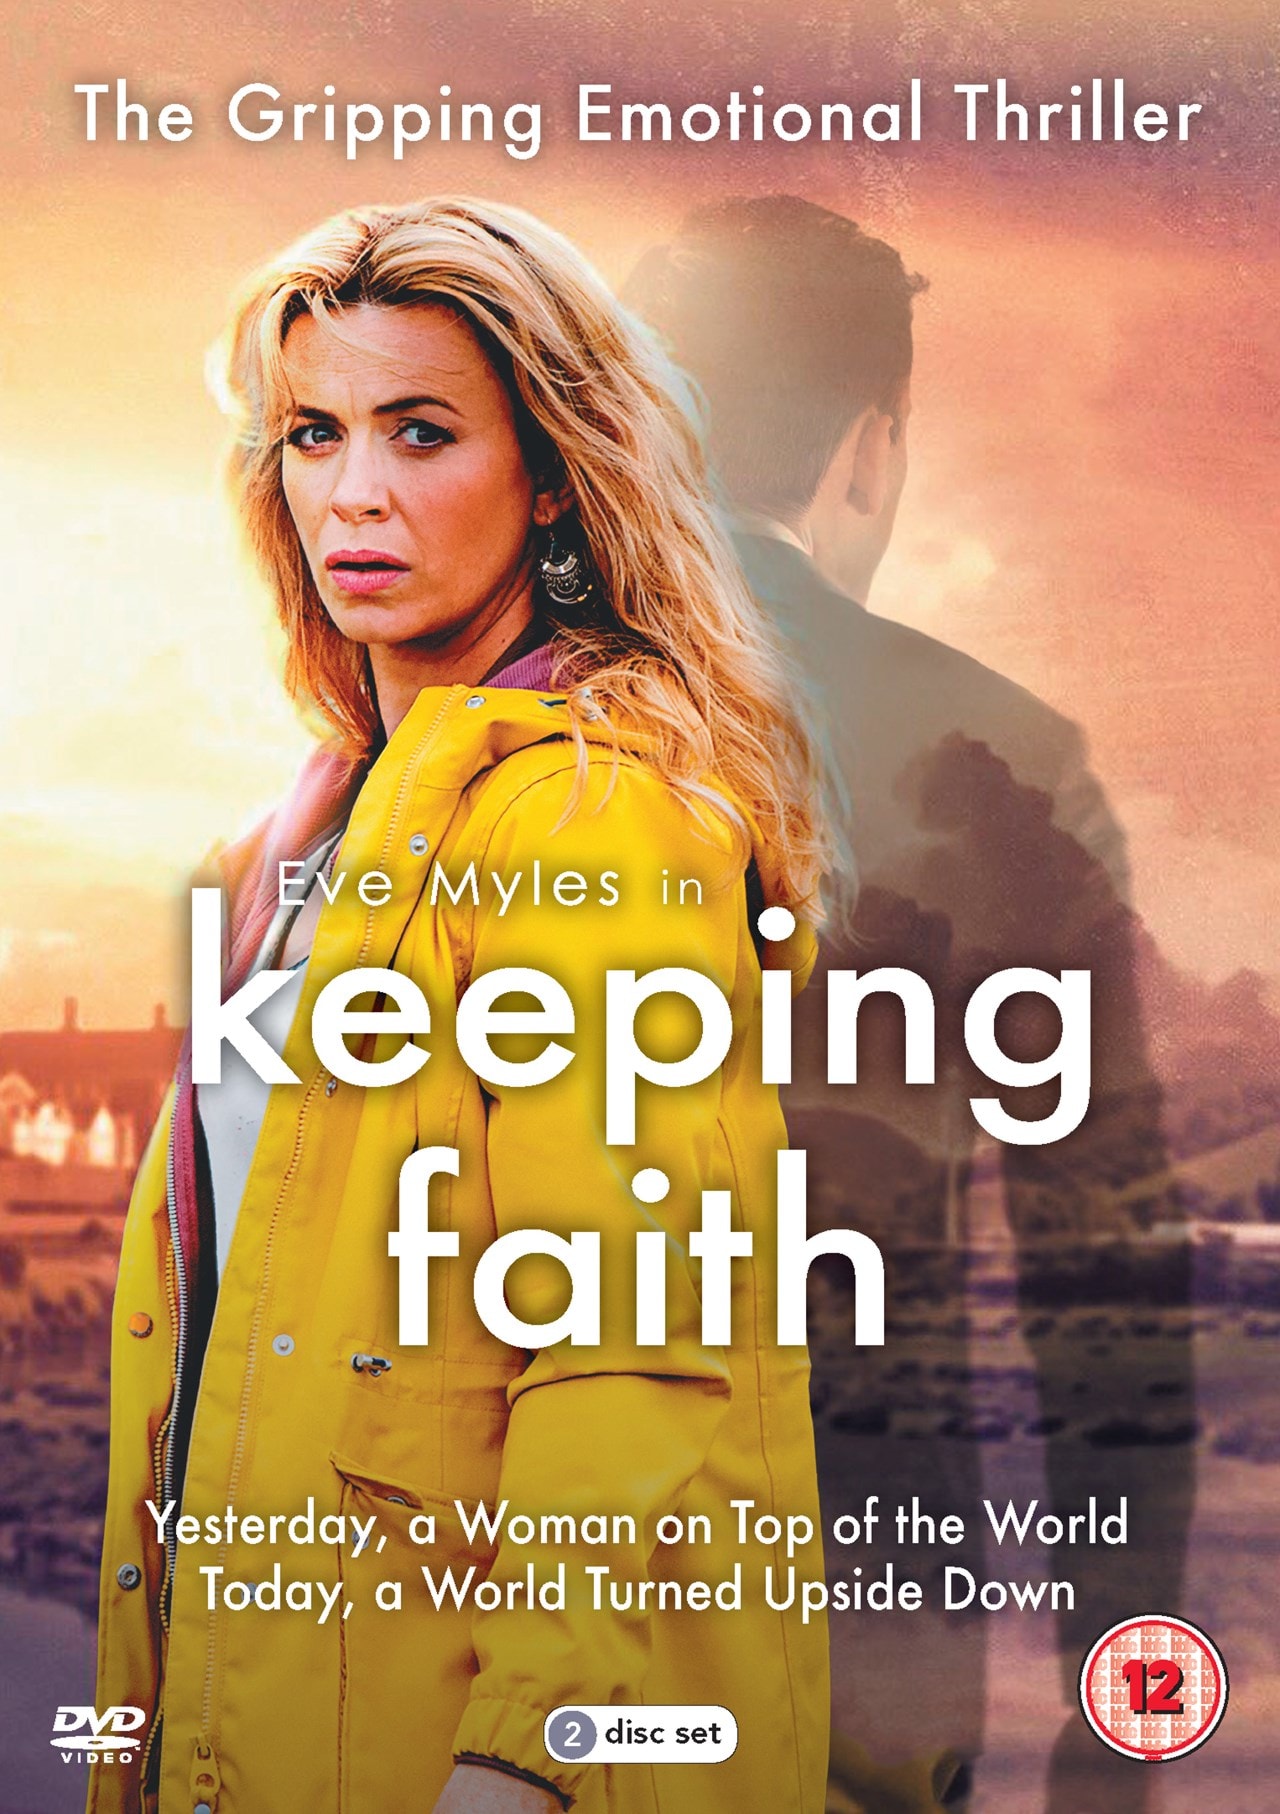 Keeping Faith | DVD | Free shipping over £20 | HMV Store